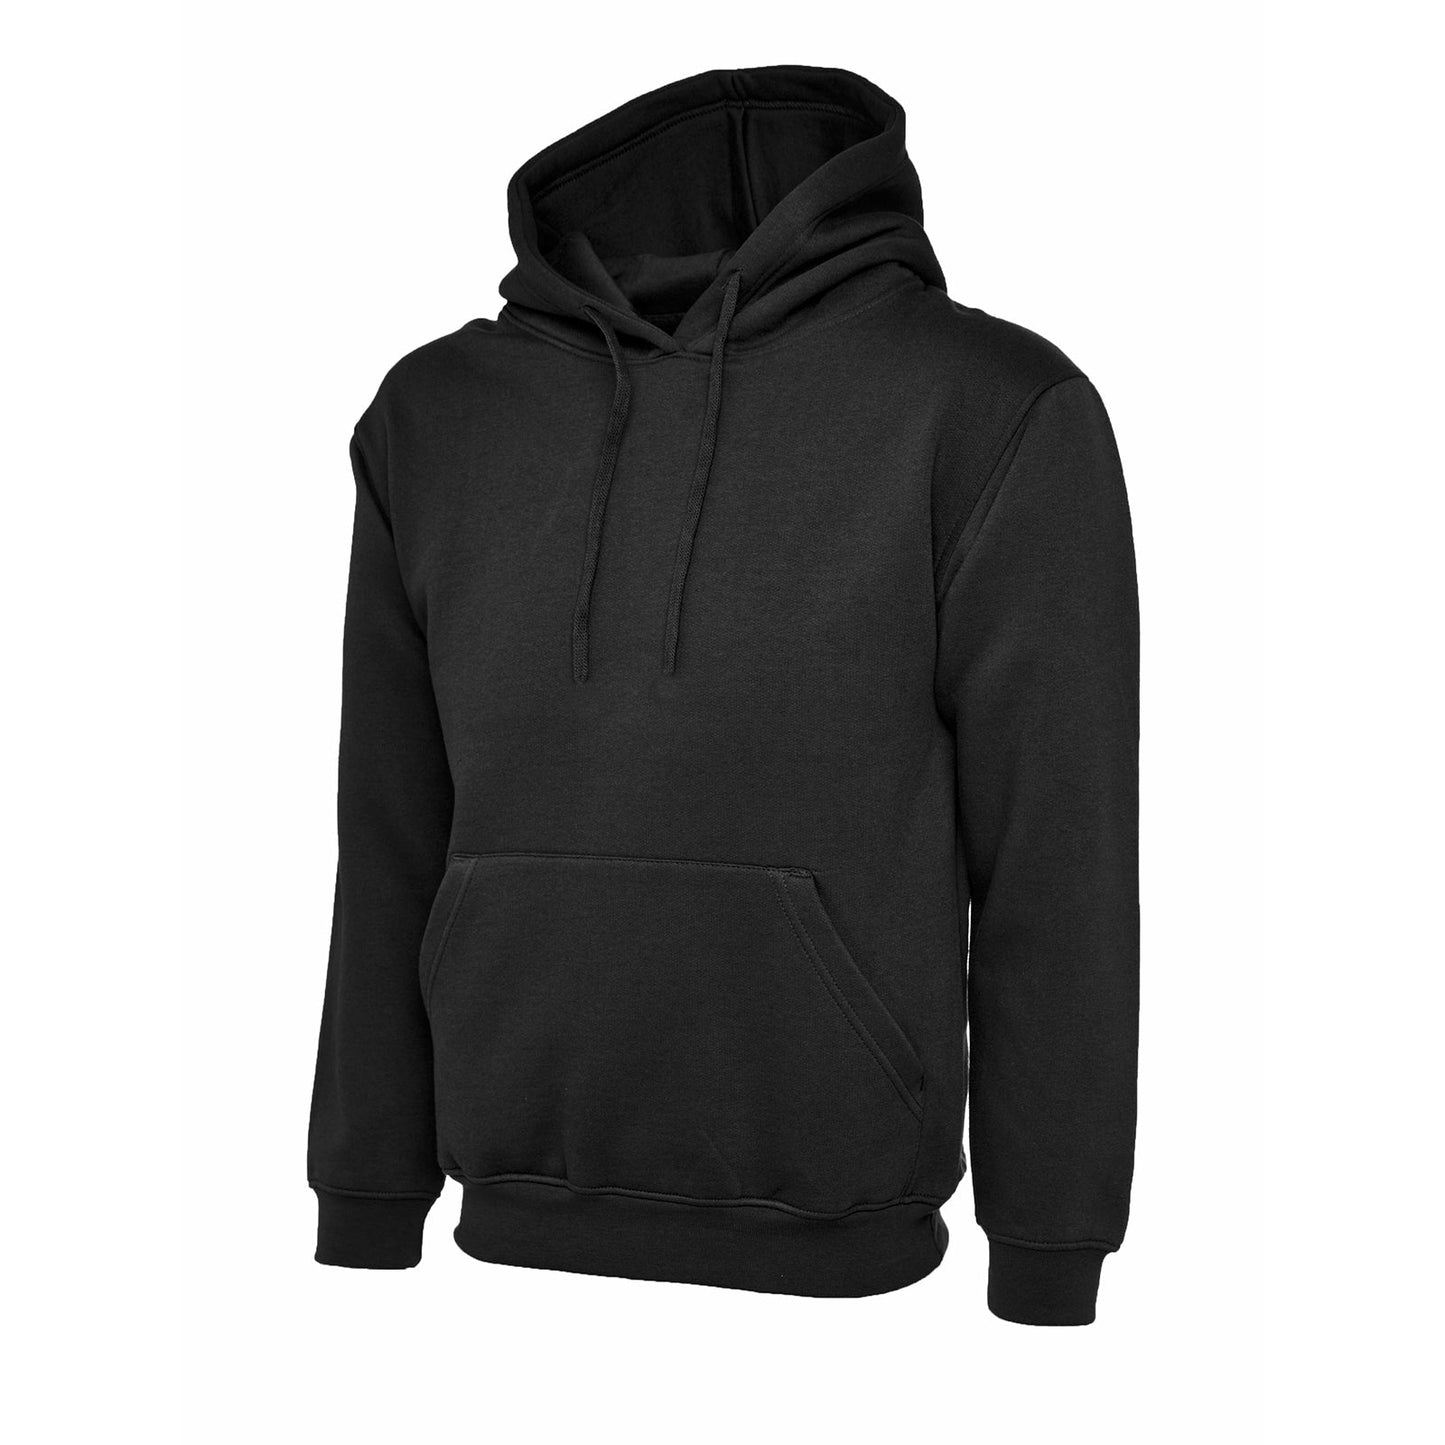 Olympic Hooded Sweatshirt Black